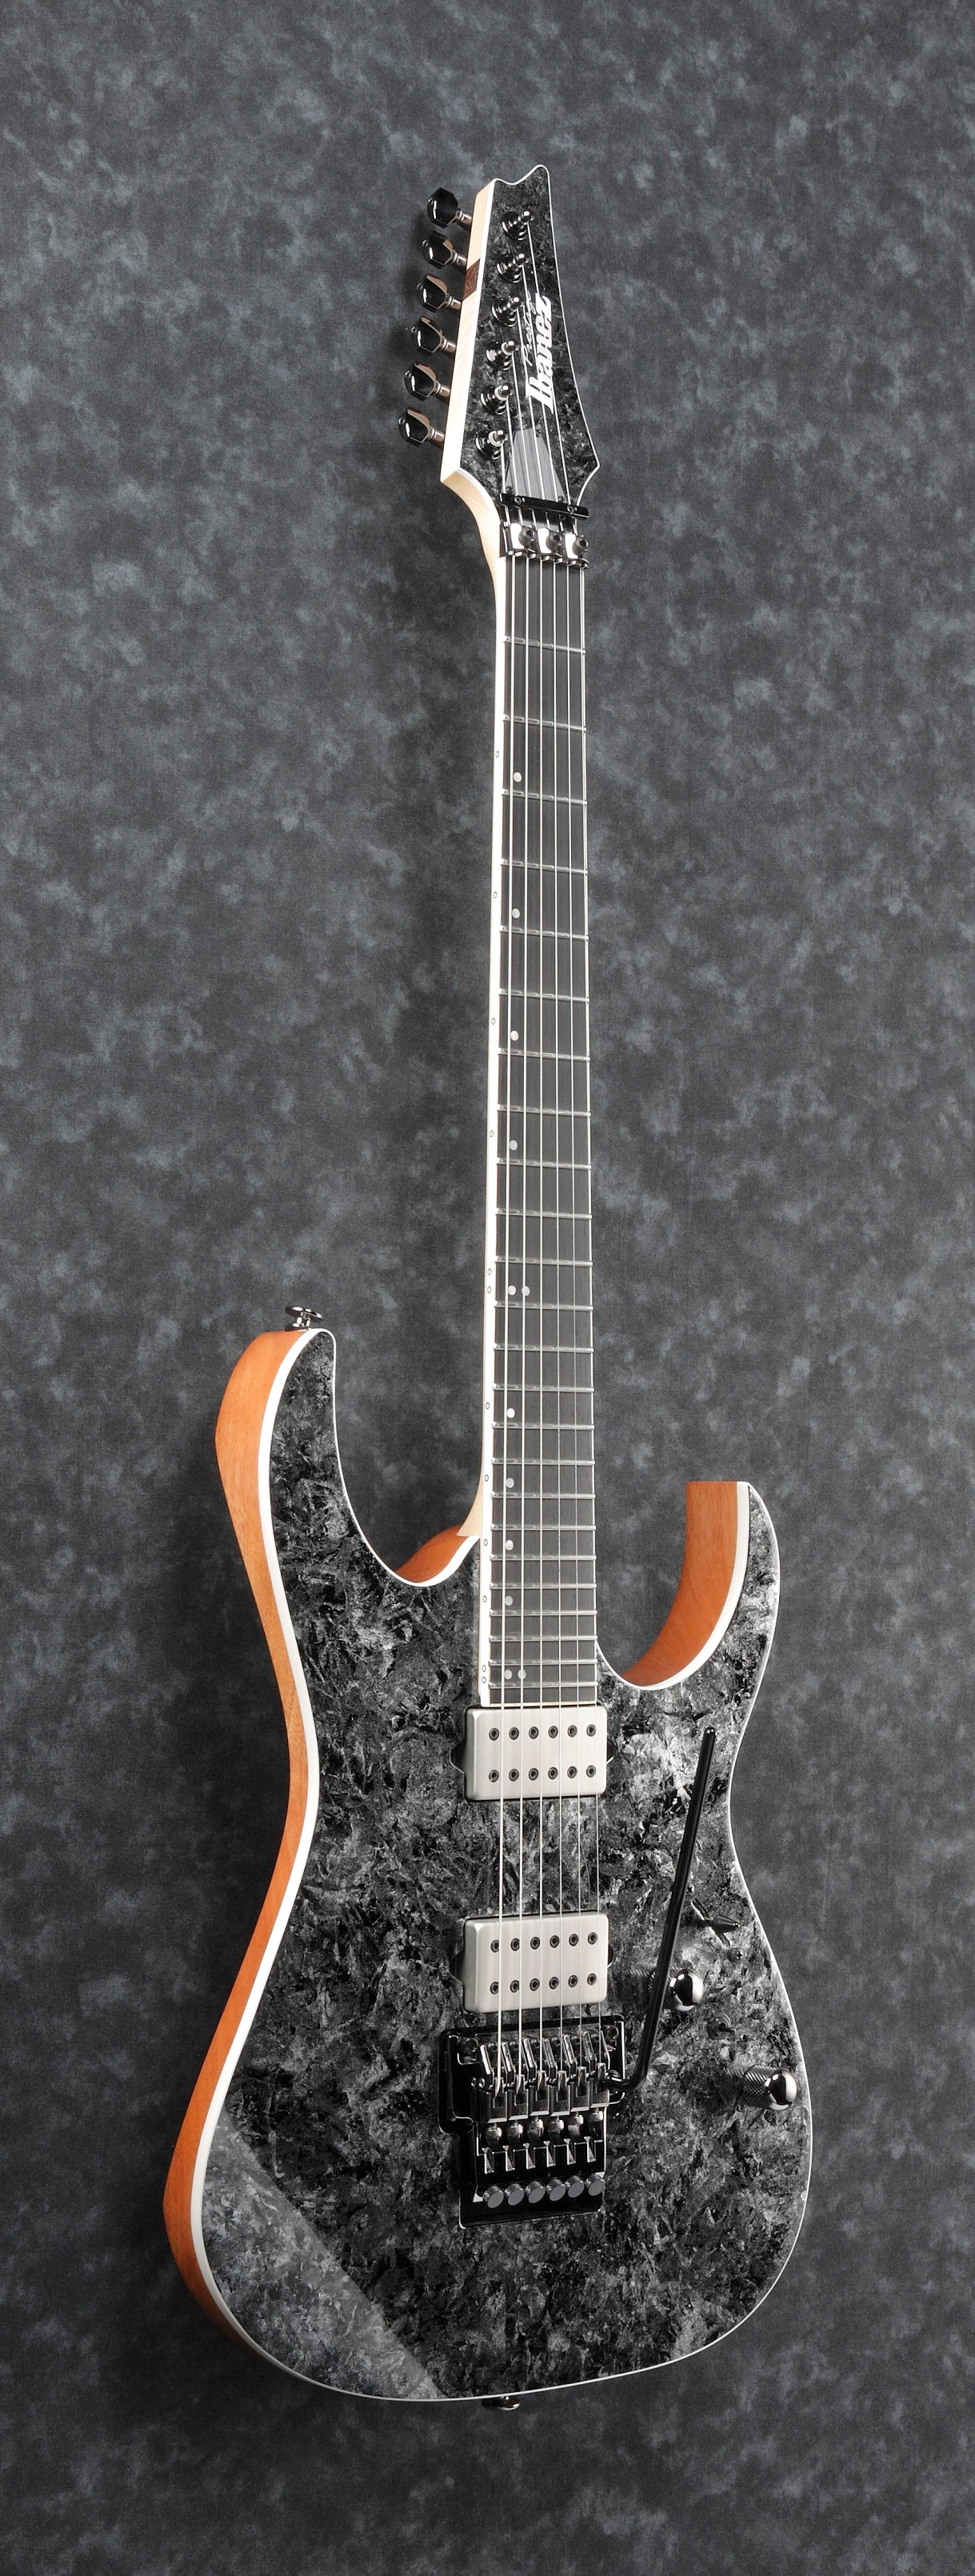 Ibanez Prestige RG5320CSW (Cosmic Shadow) Japan Made Electric Guitar 電結他